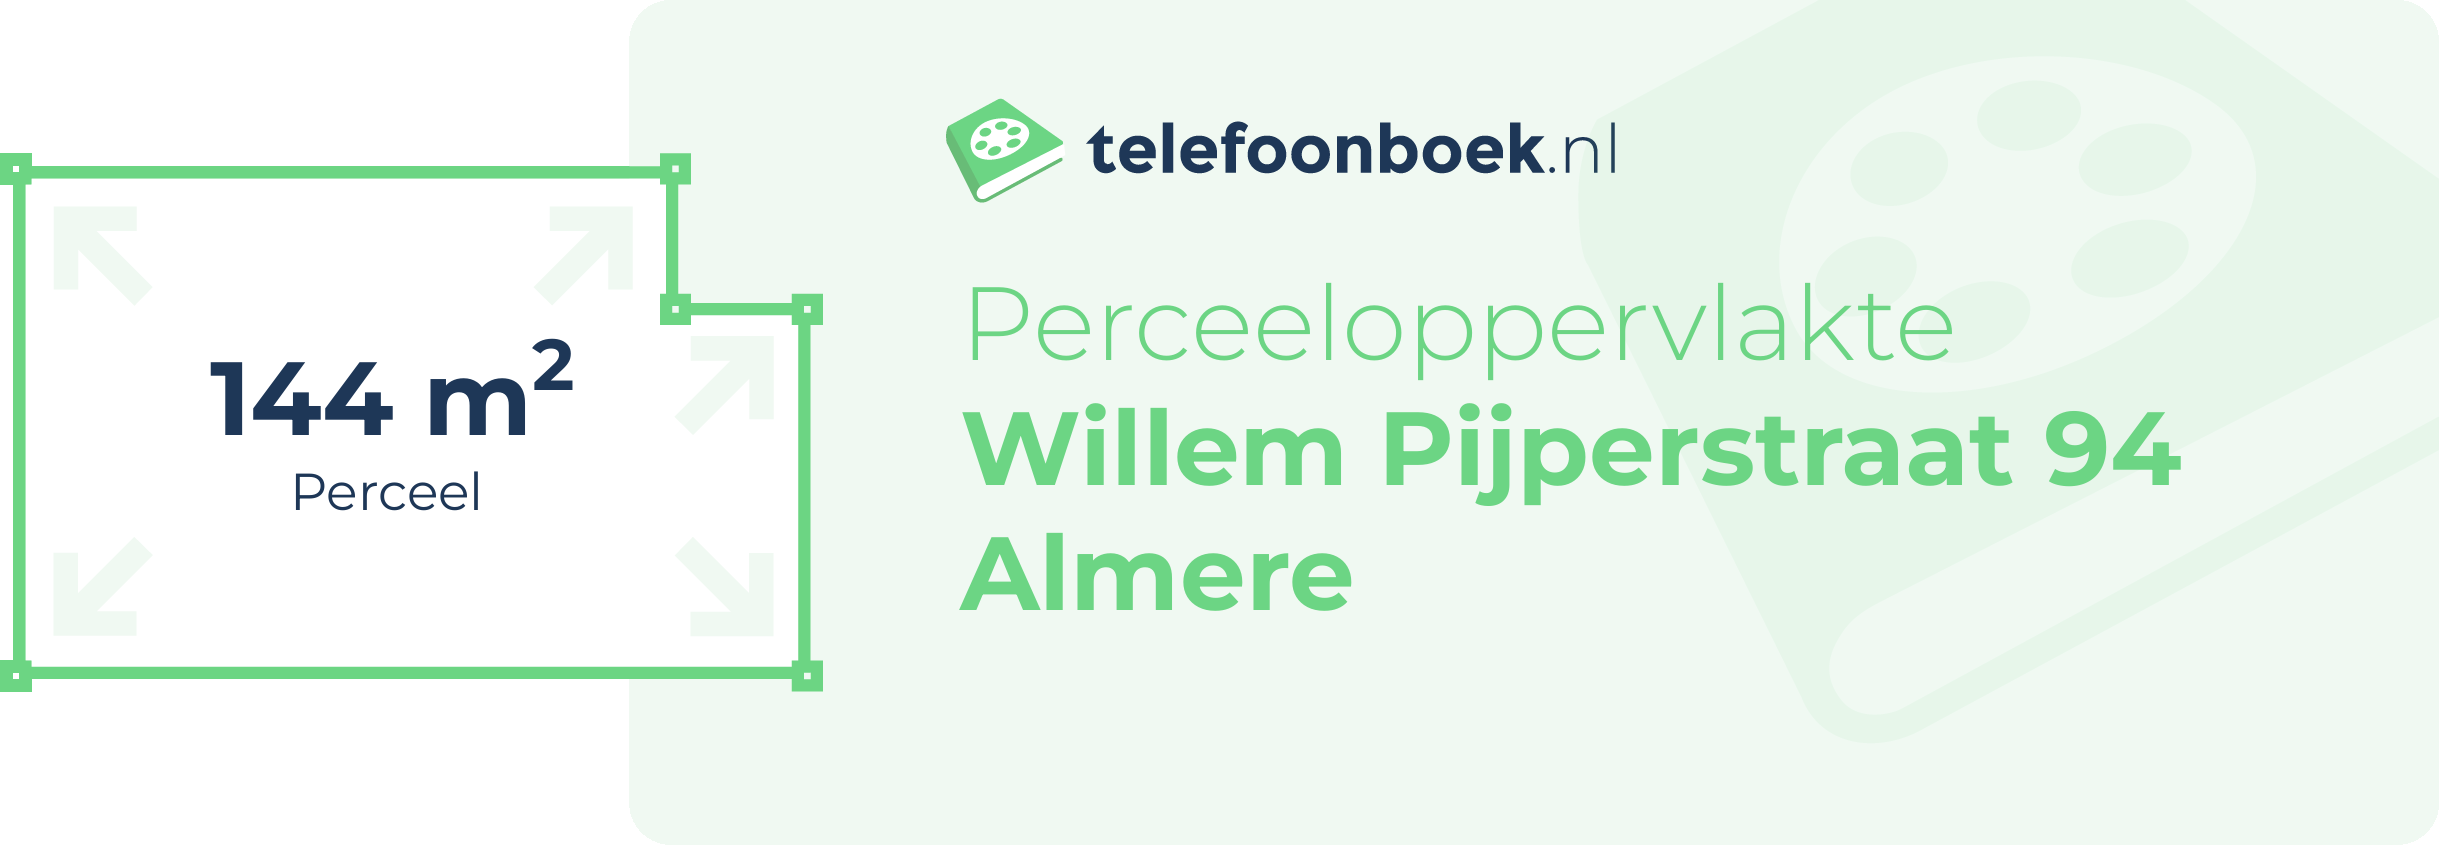 Perceeloppervlakte Willem Pijperstraat 94 Almere